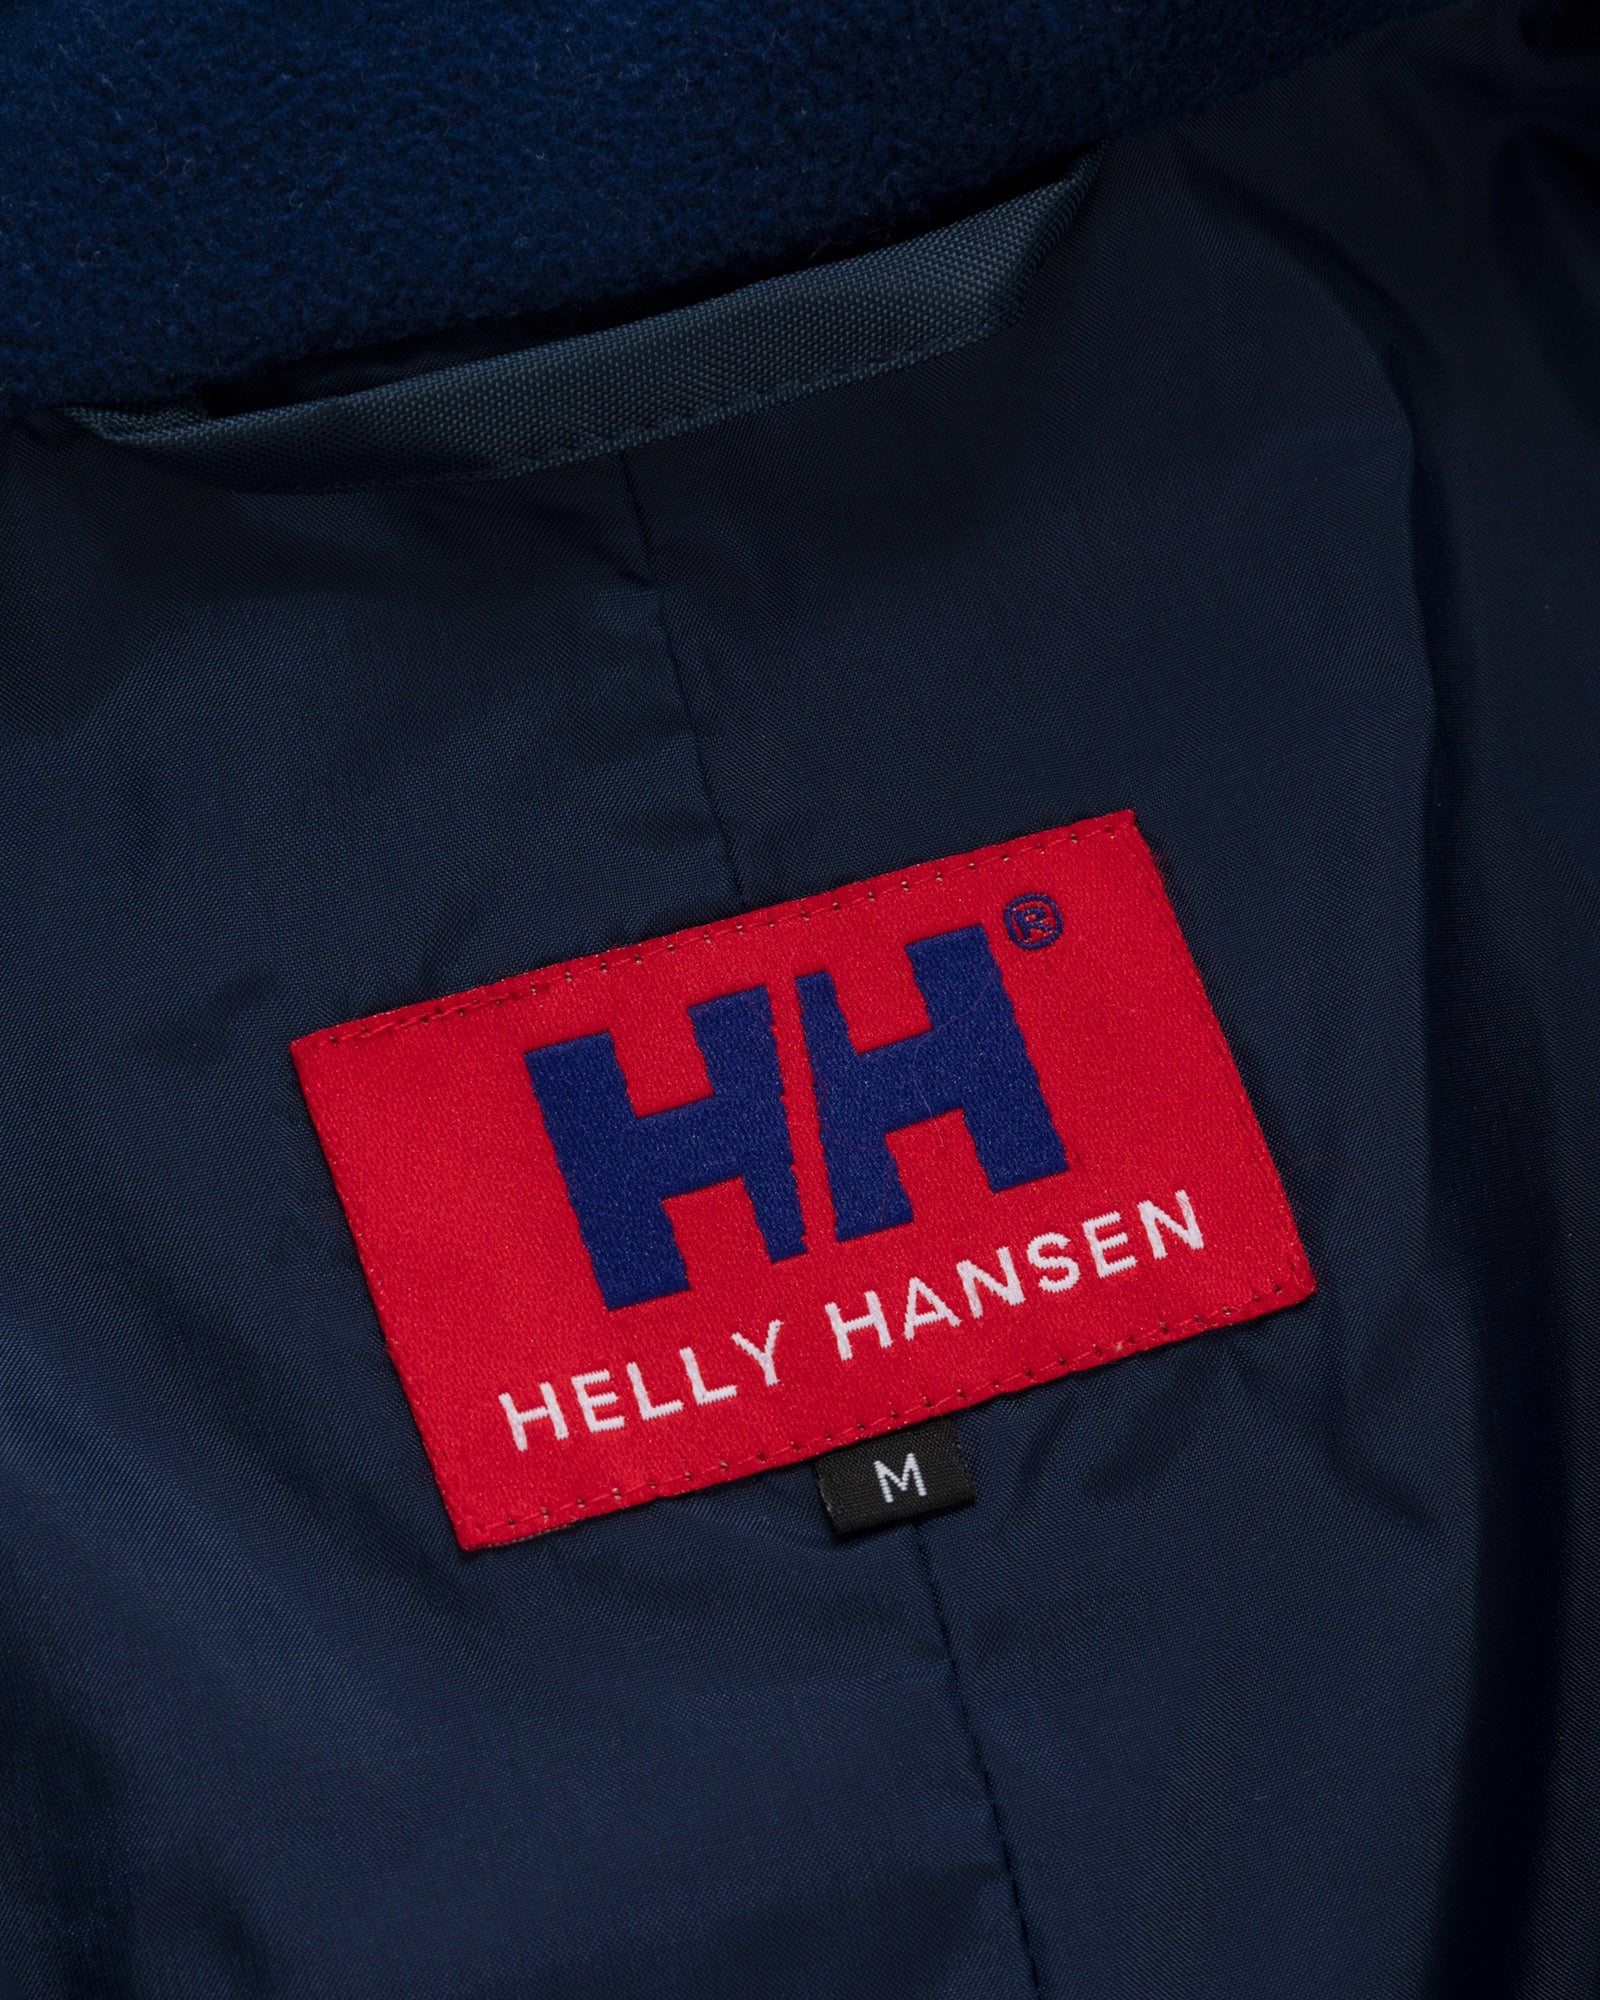 Vintage Helly Hansen Sailing Jacket